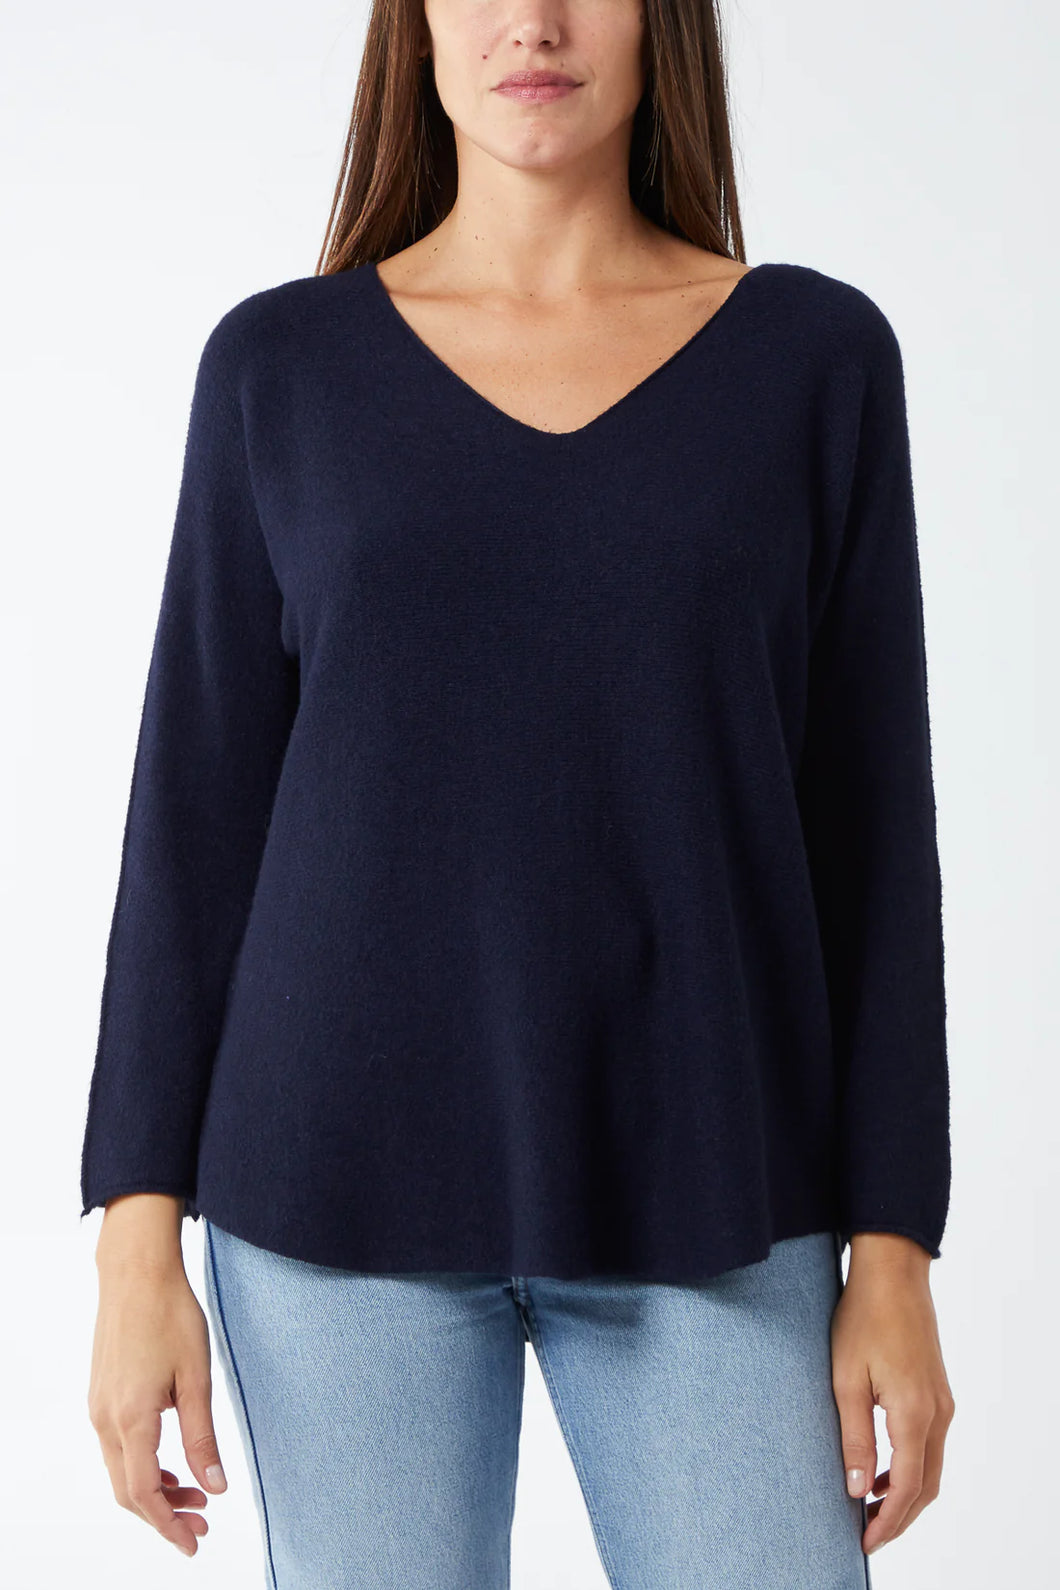 Soft knit plain v-neck jumper